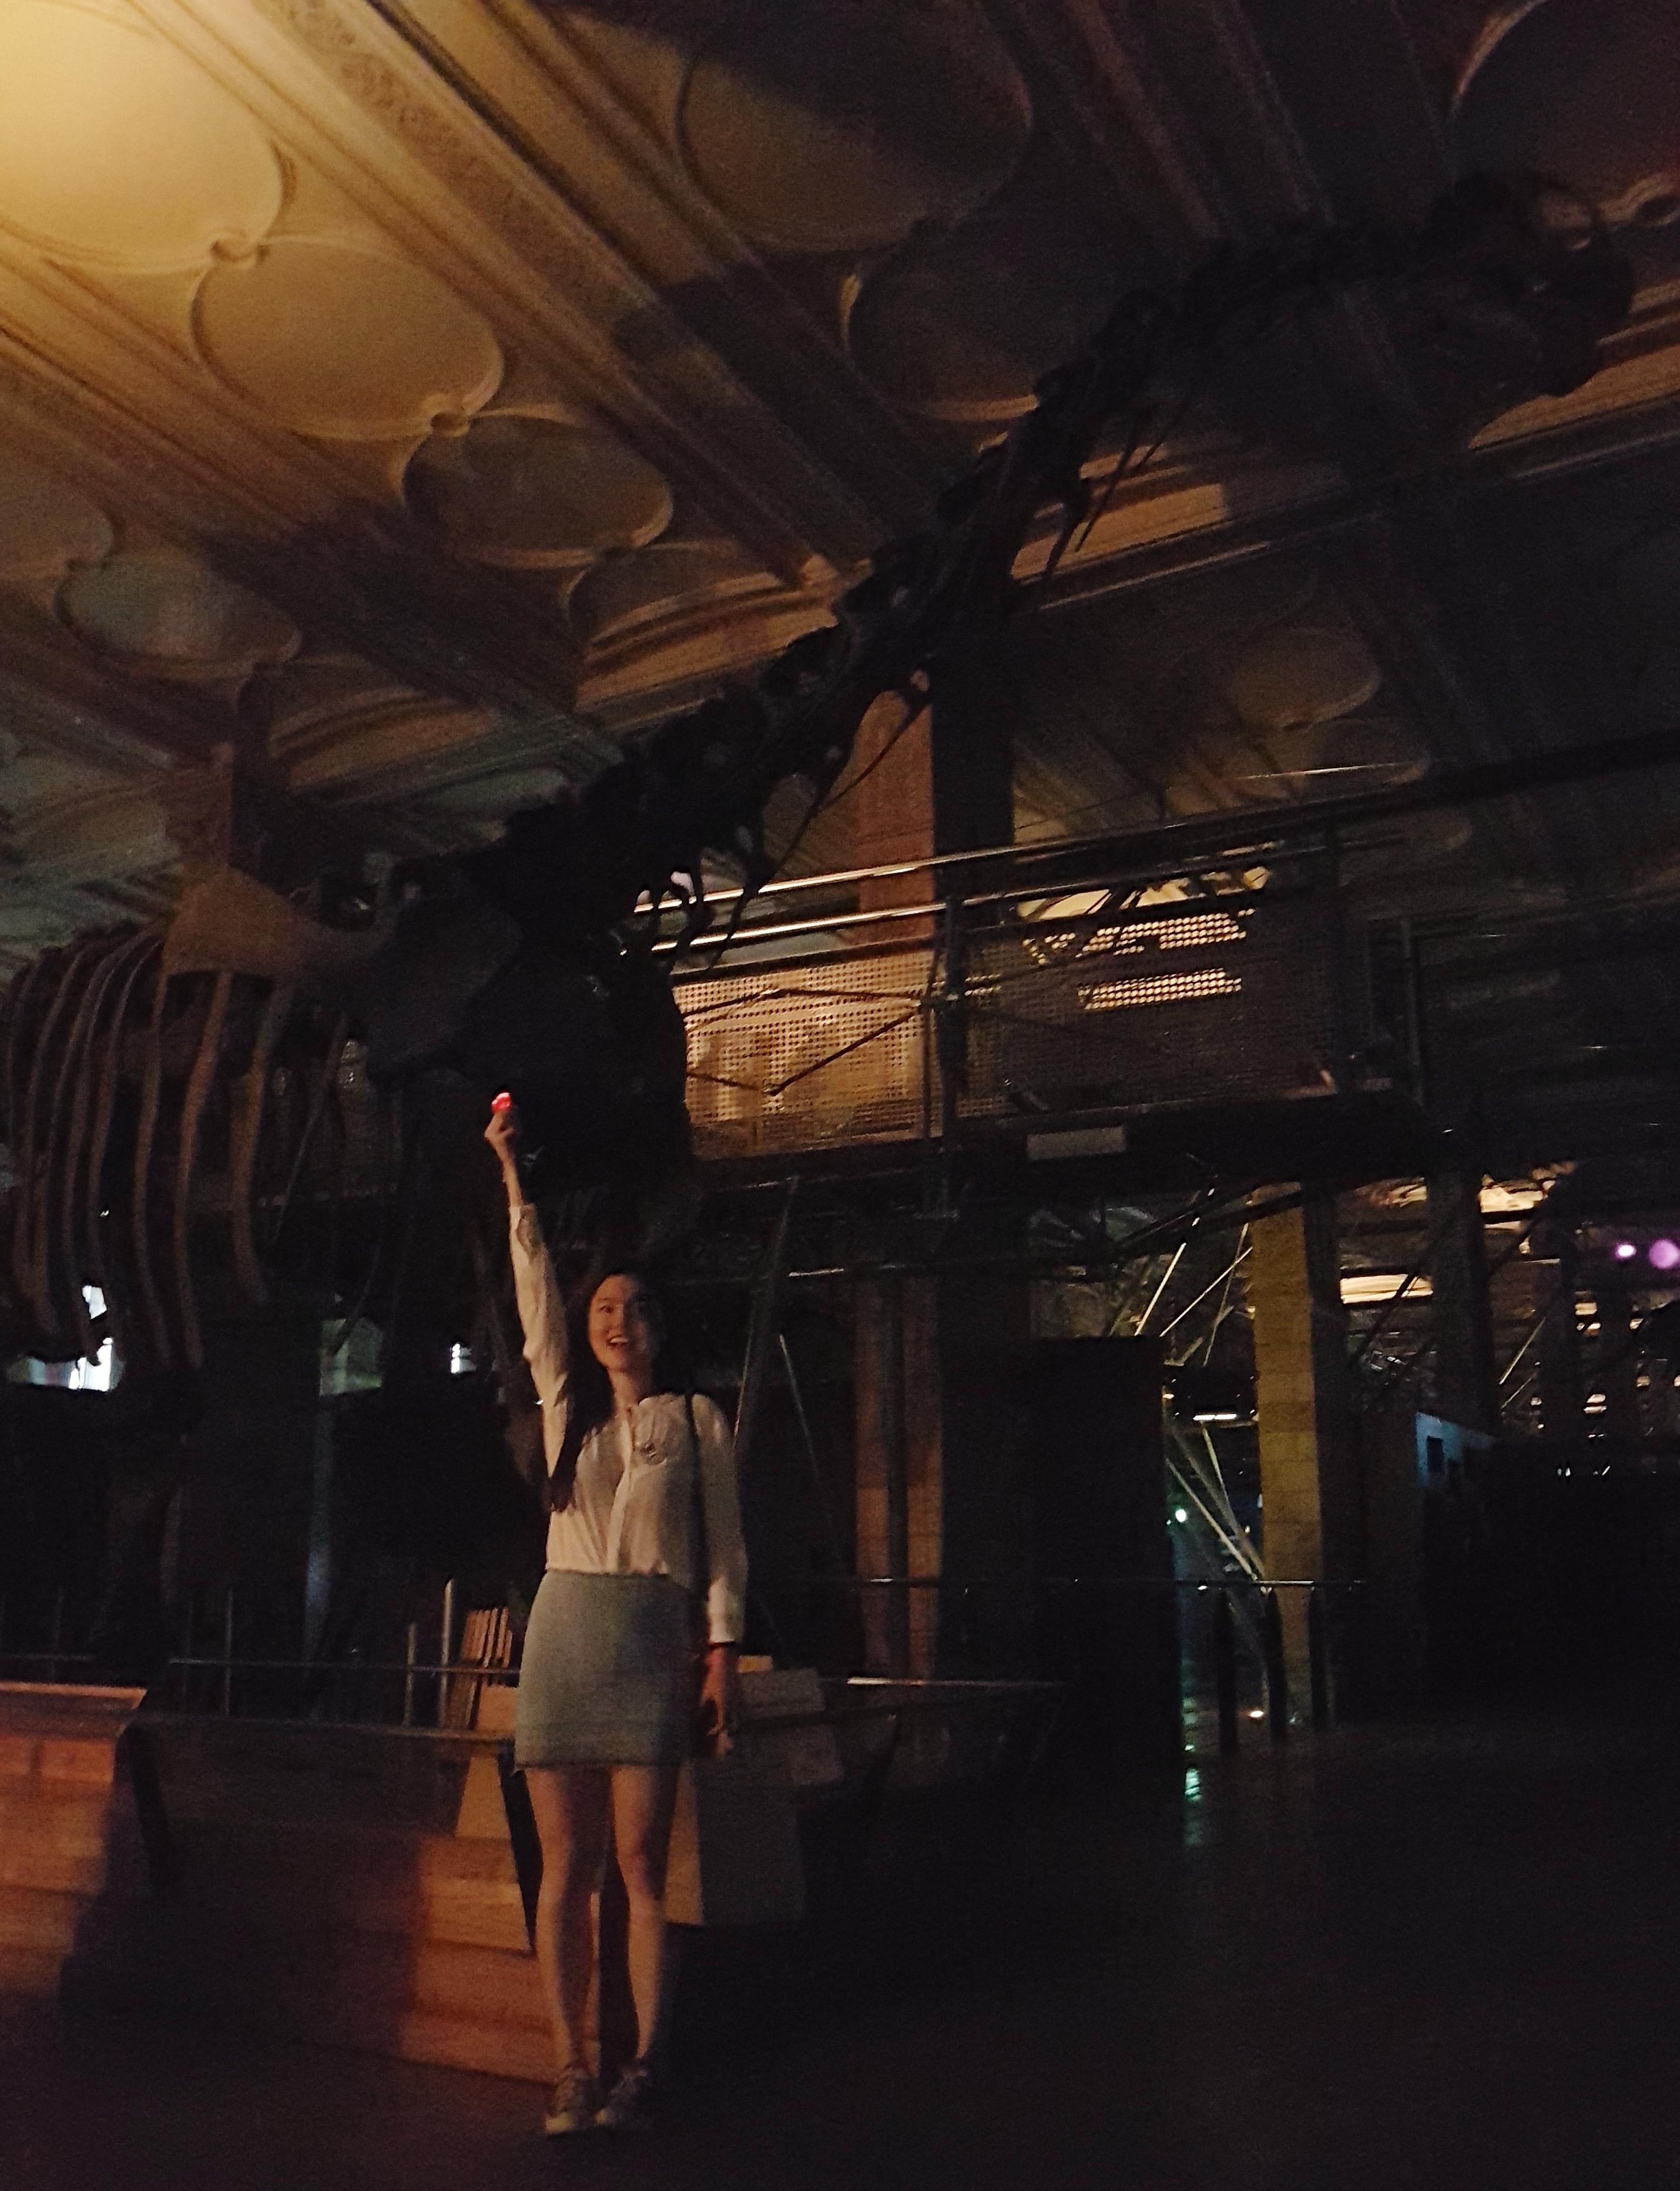 Exploring the Dinosaur Gallery